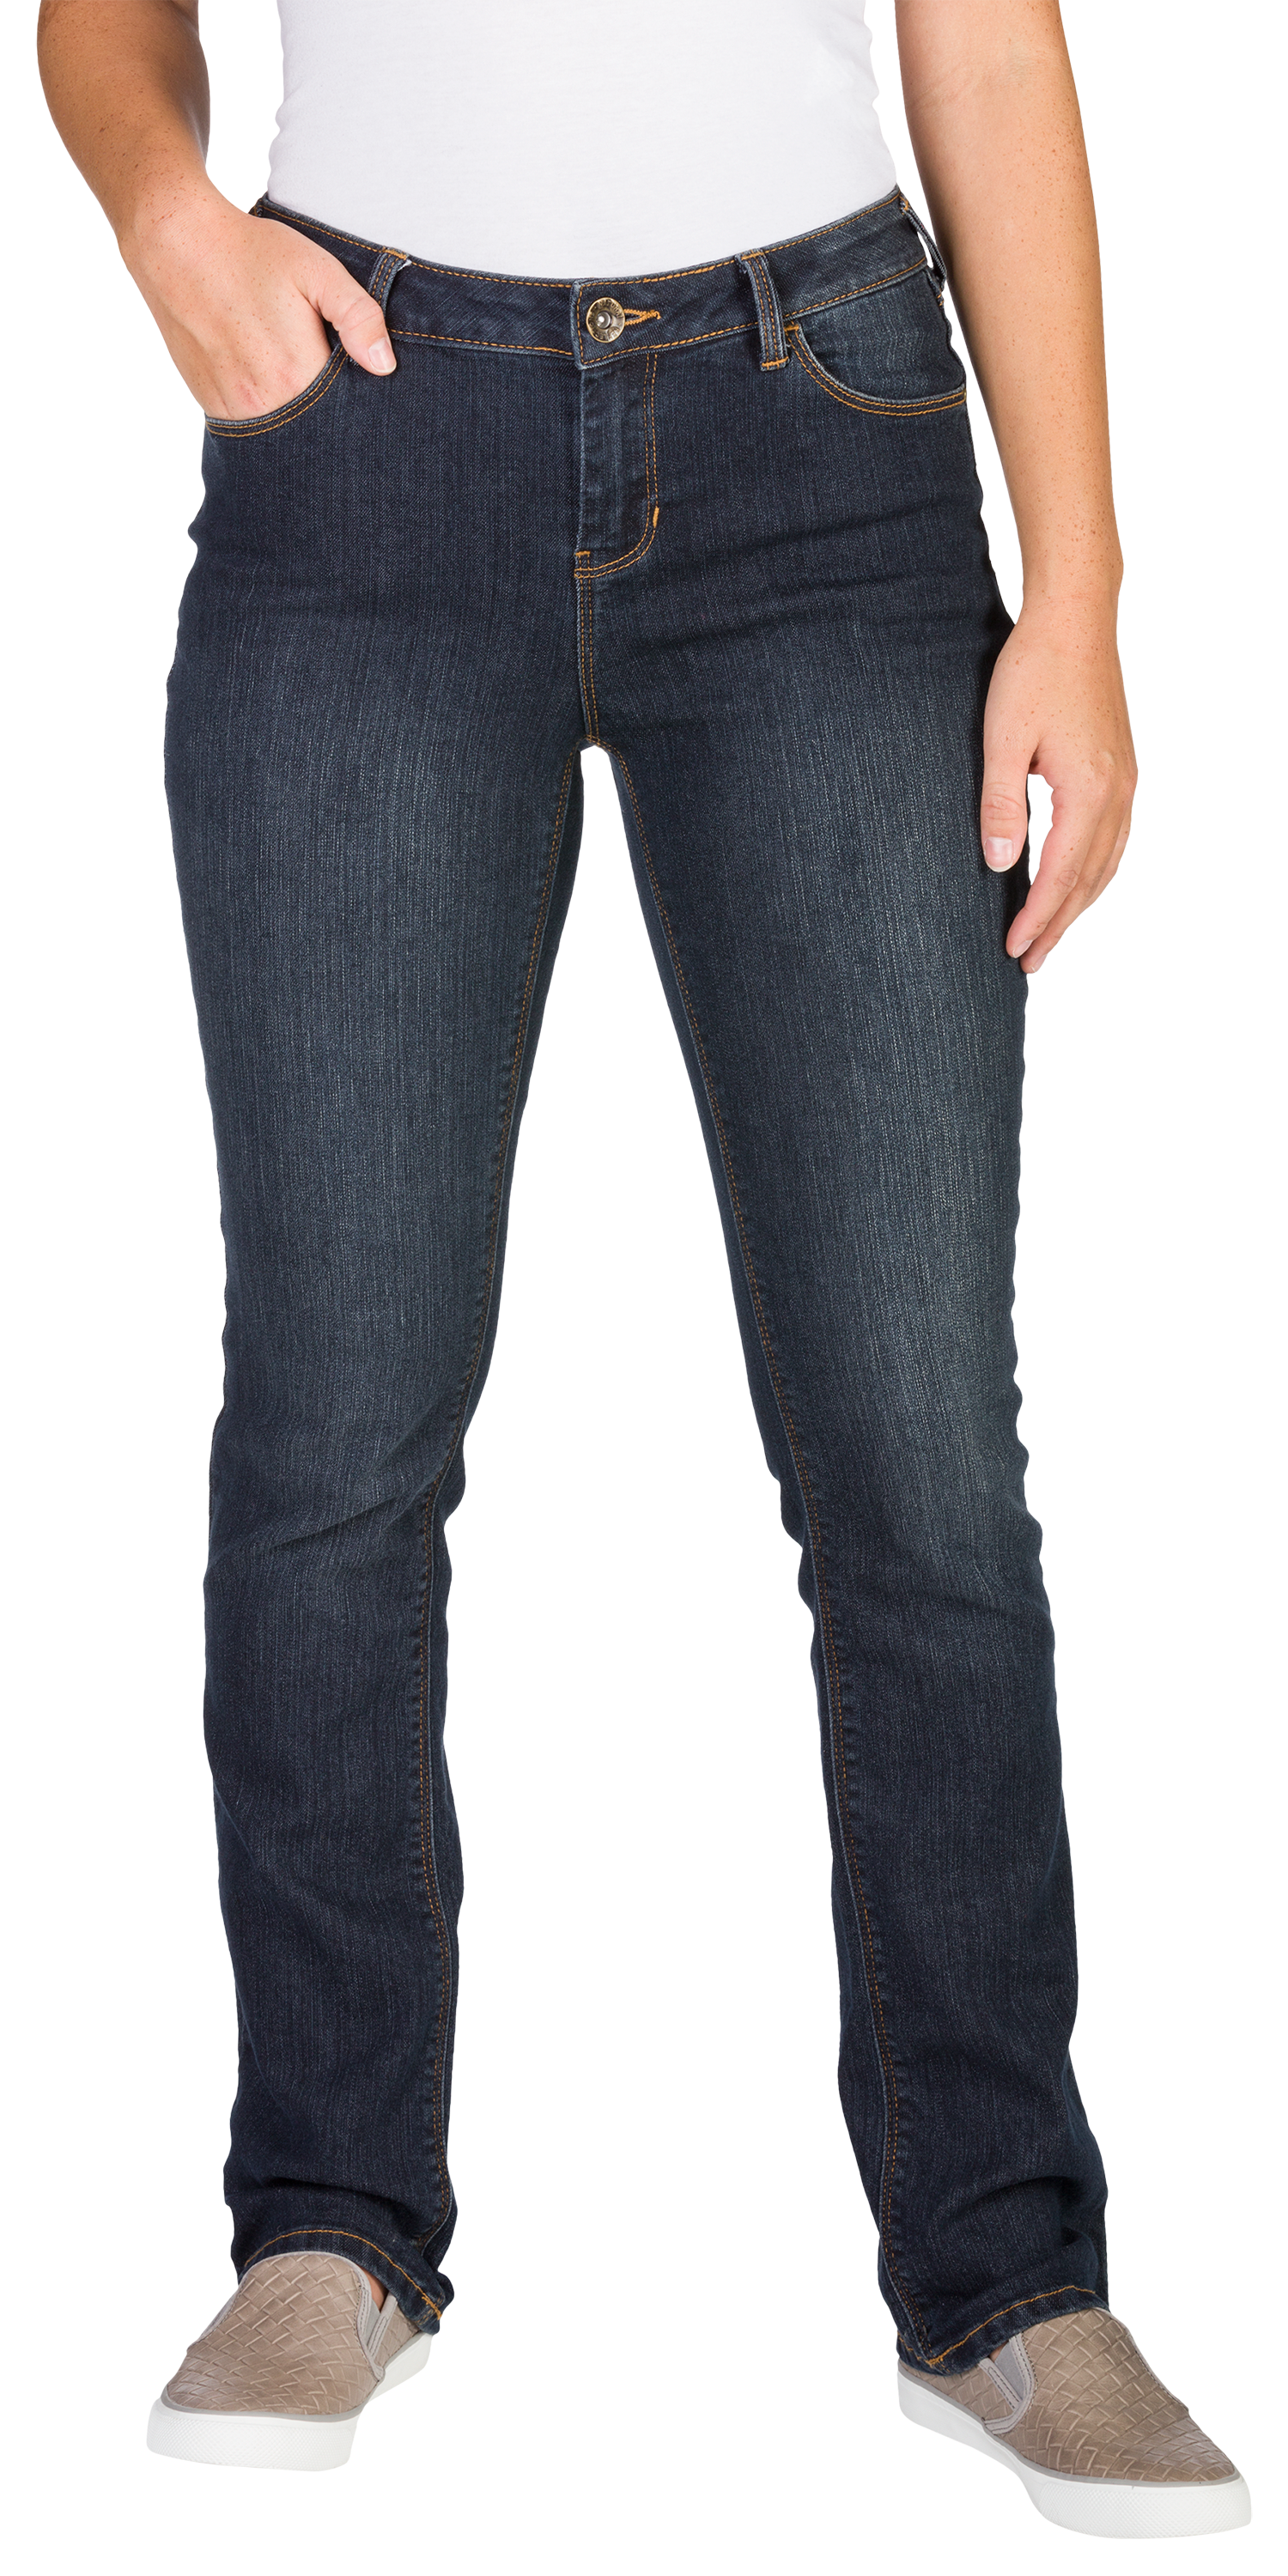 Tall Women's Jeans - Dark Wash Classic Fit Bootcut Tall Women's Jeans